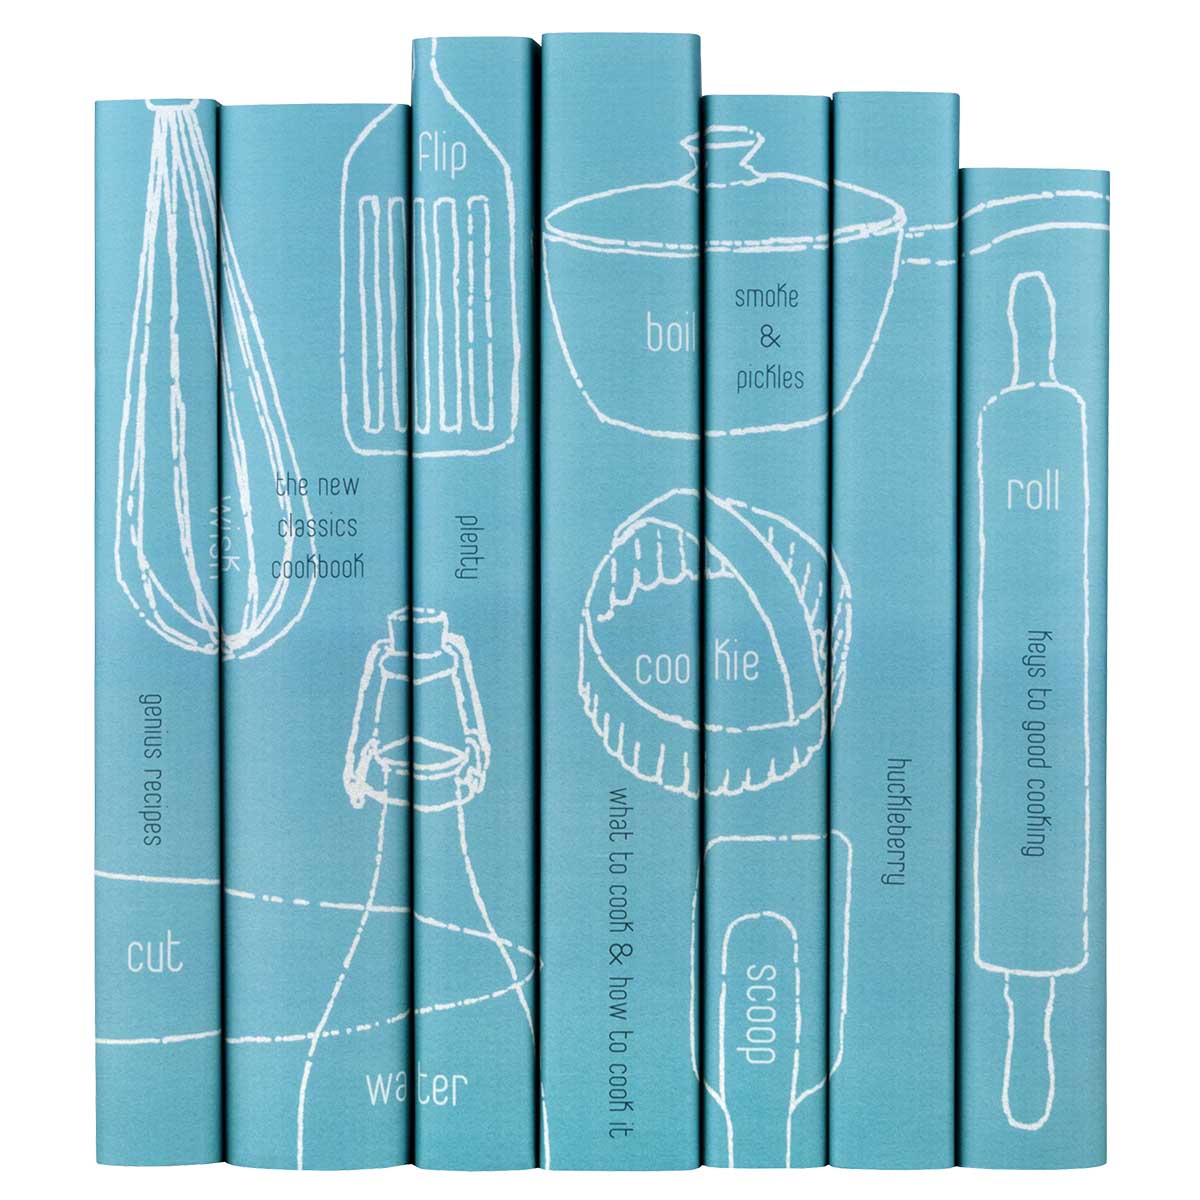 C3BK7-contemporary-cookbooks-front-1200.jpg